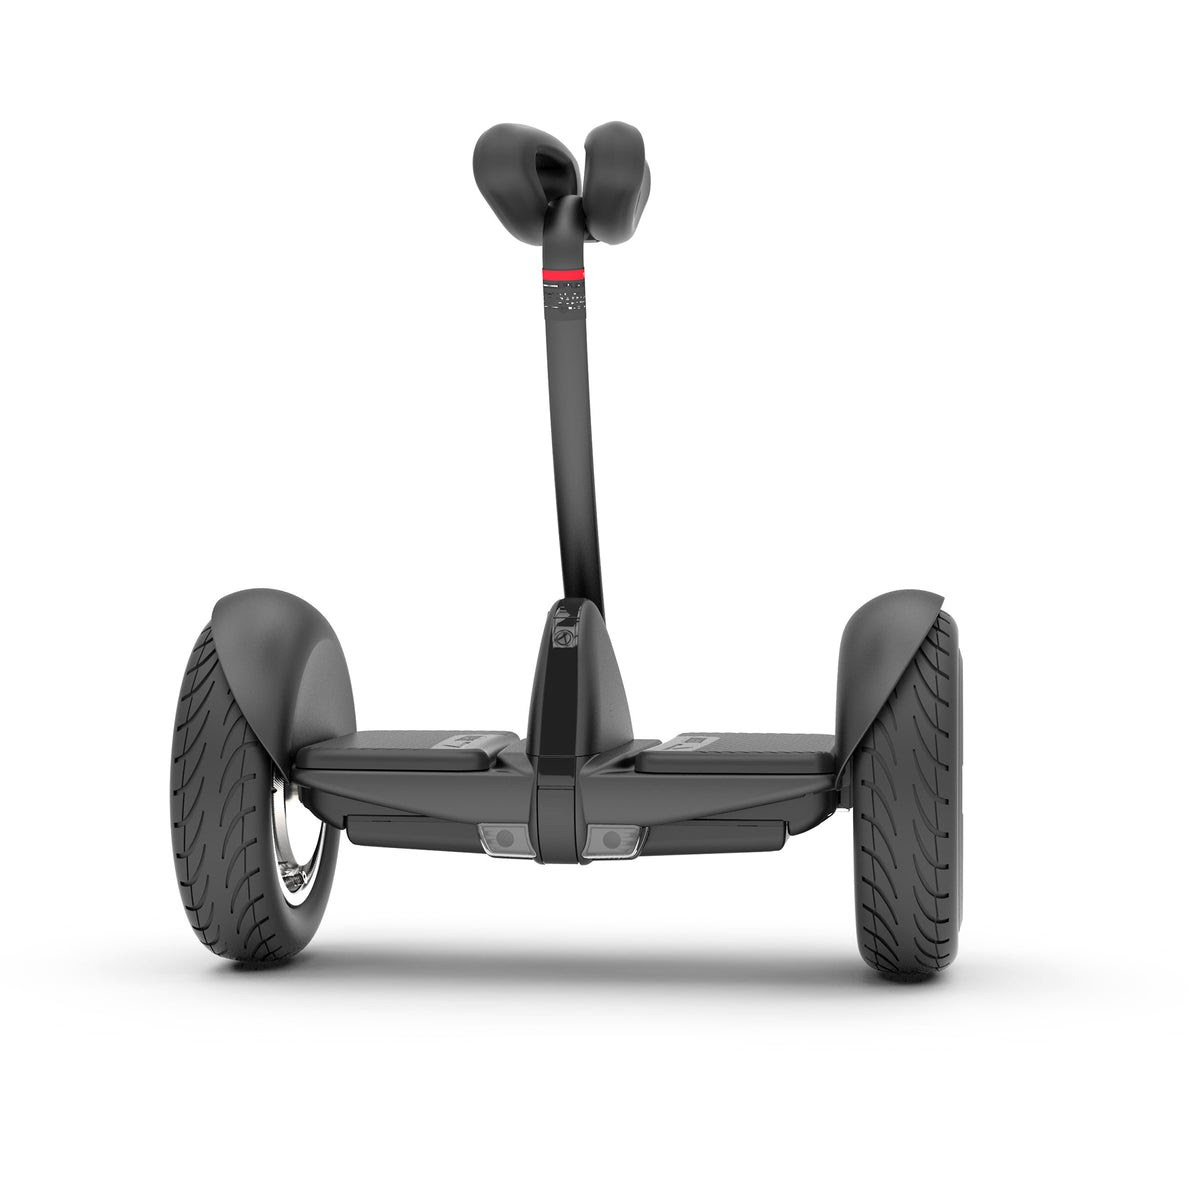 Segway Ninebot S Smart Self-Balancing Electric Transporter.